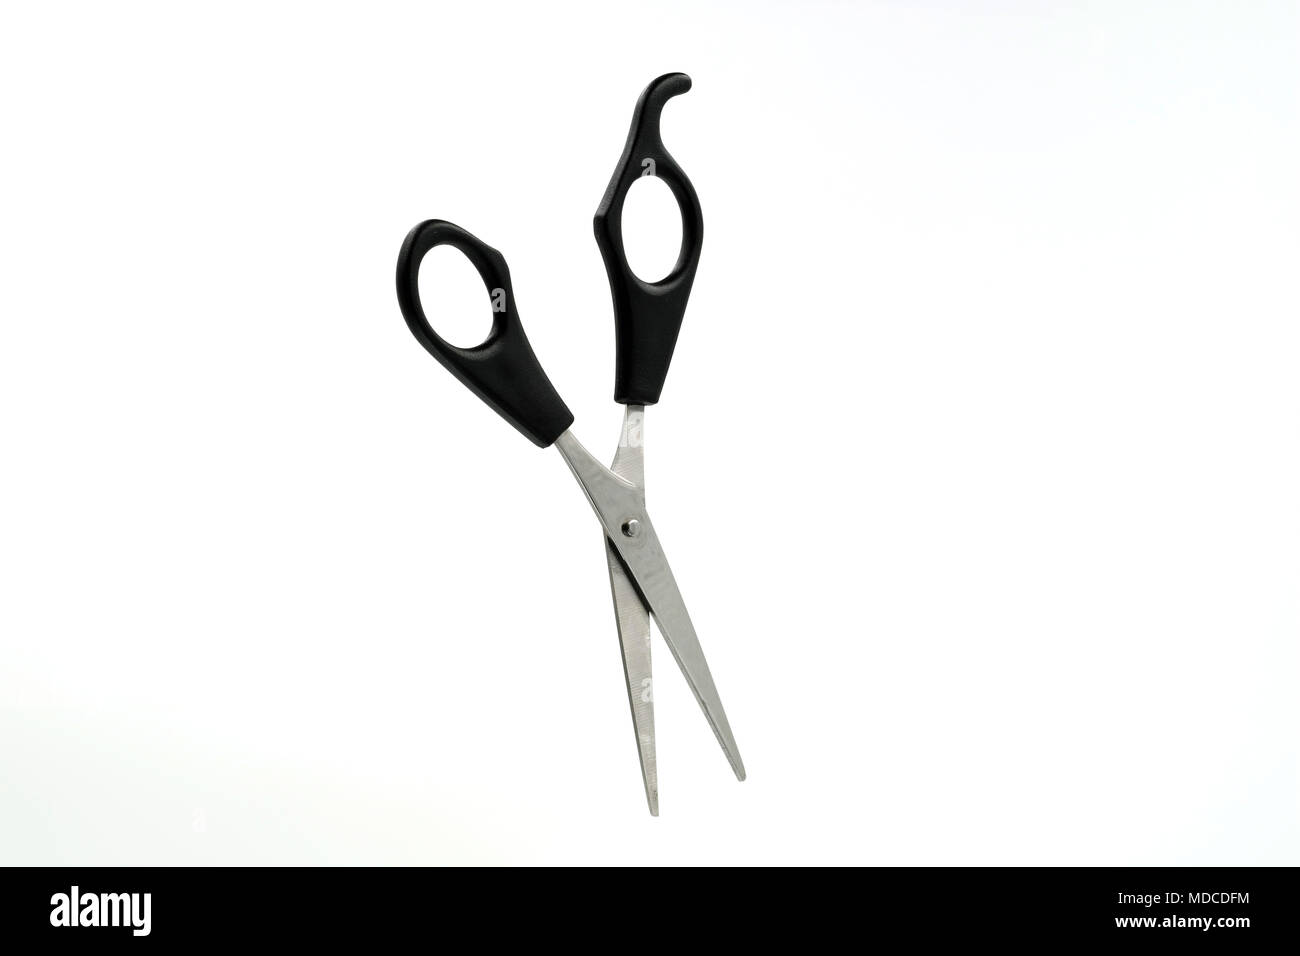 Black scissors isolated on white background Stock Photo